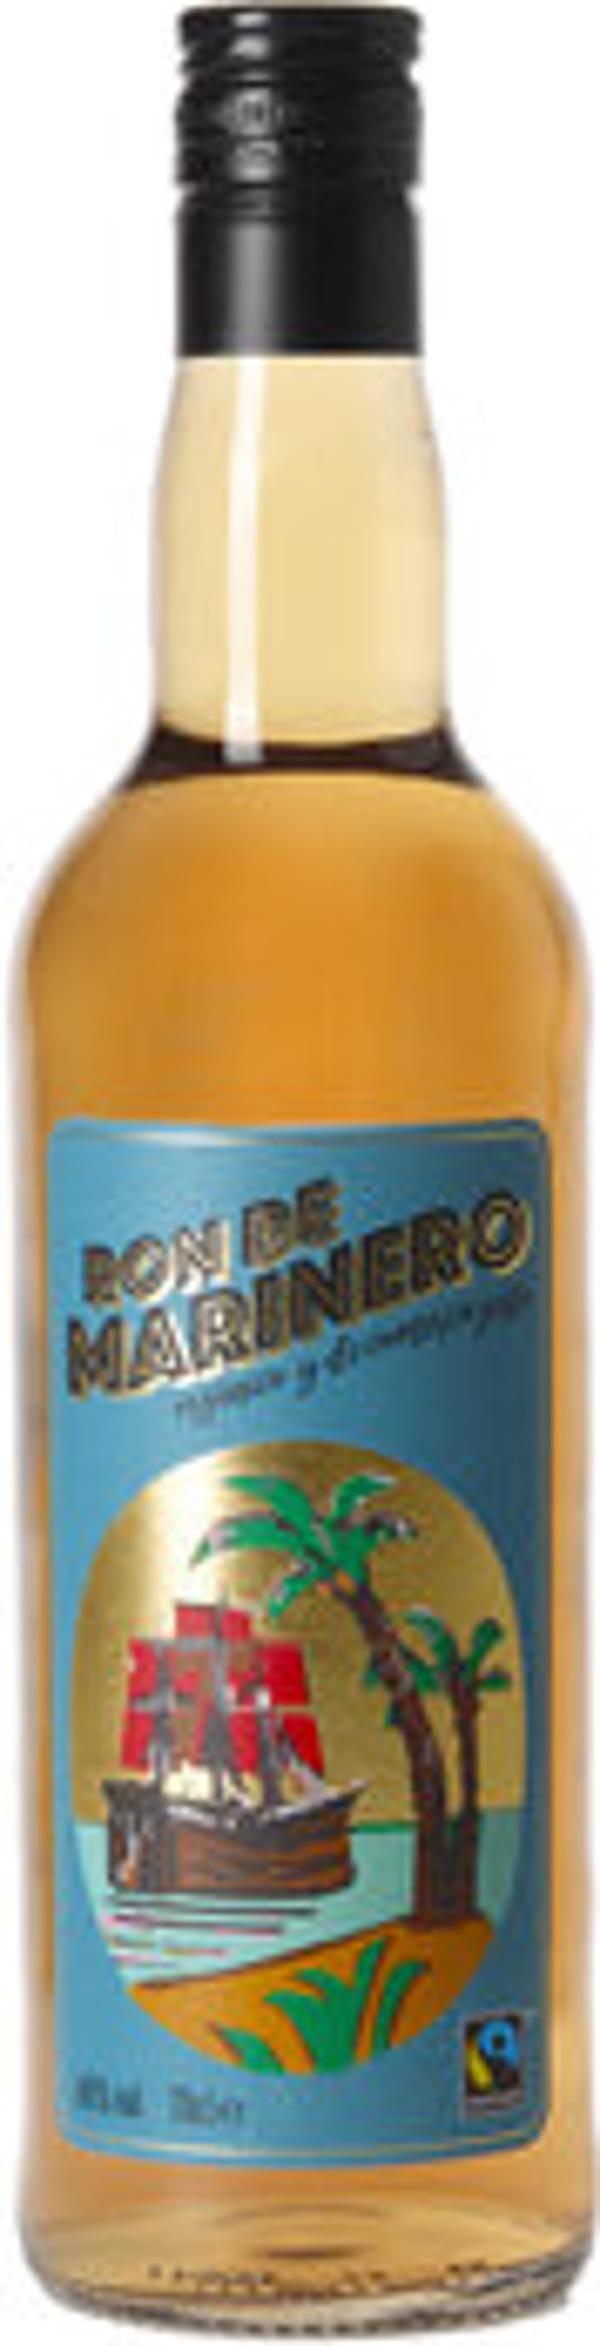 Produktfoto zu Rum de Marinero fair trade braun 20ml